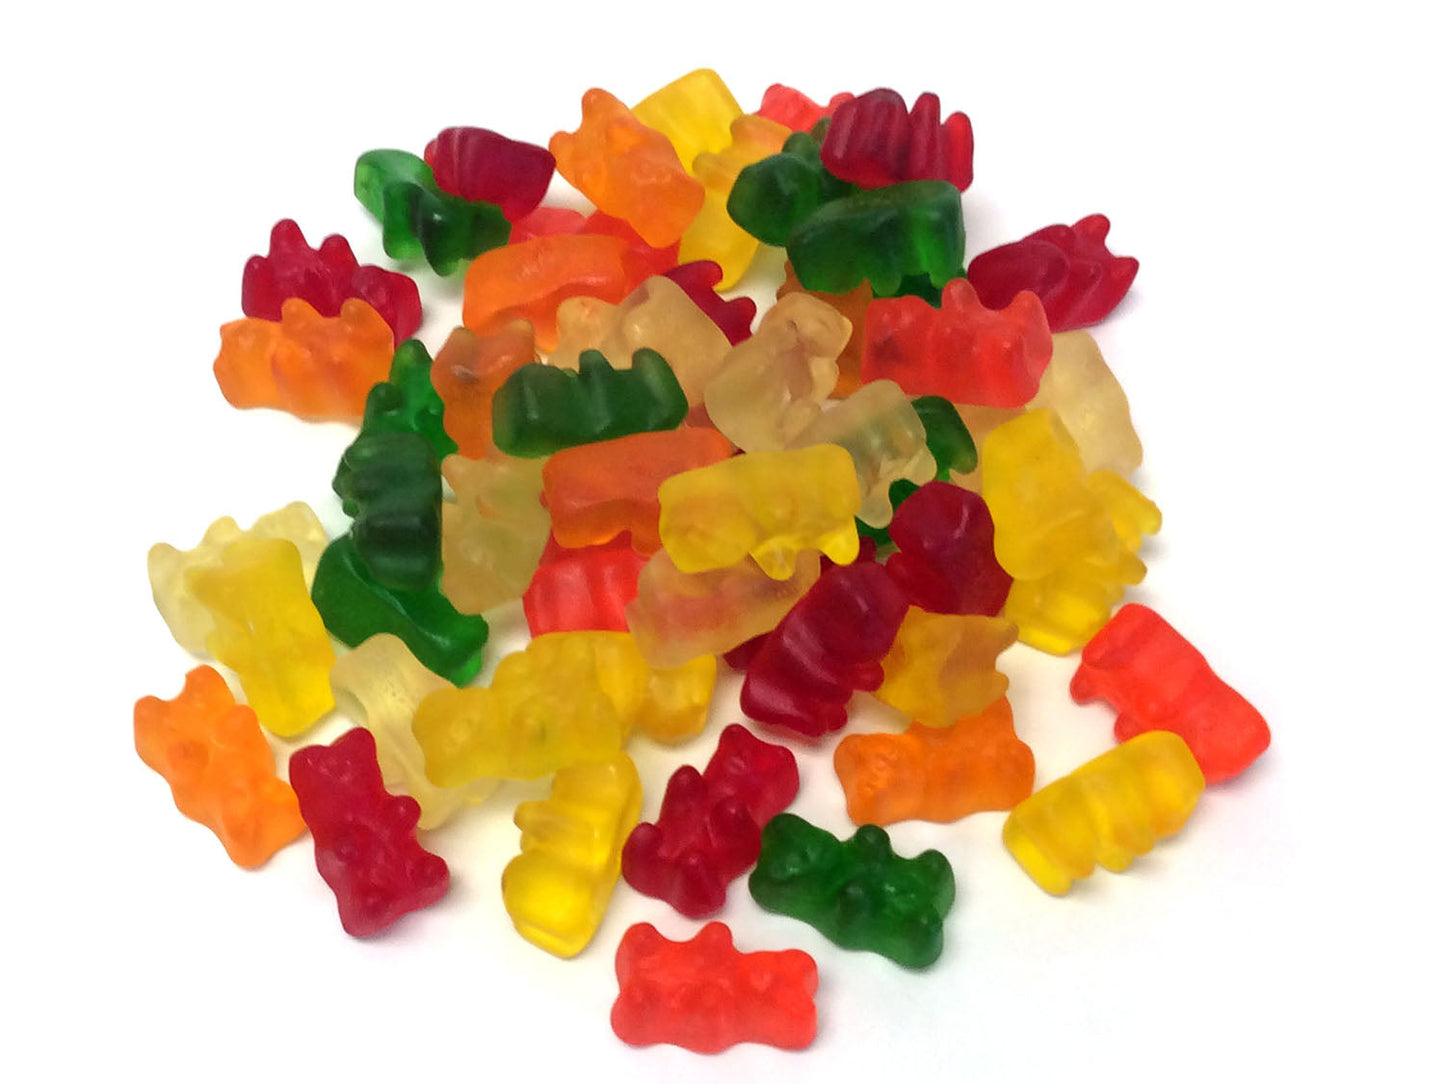 Gummi Bears - Bulk 3 lb bag